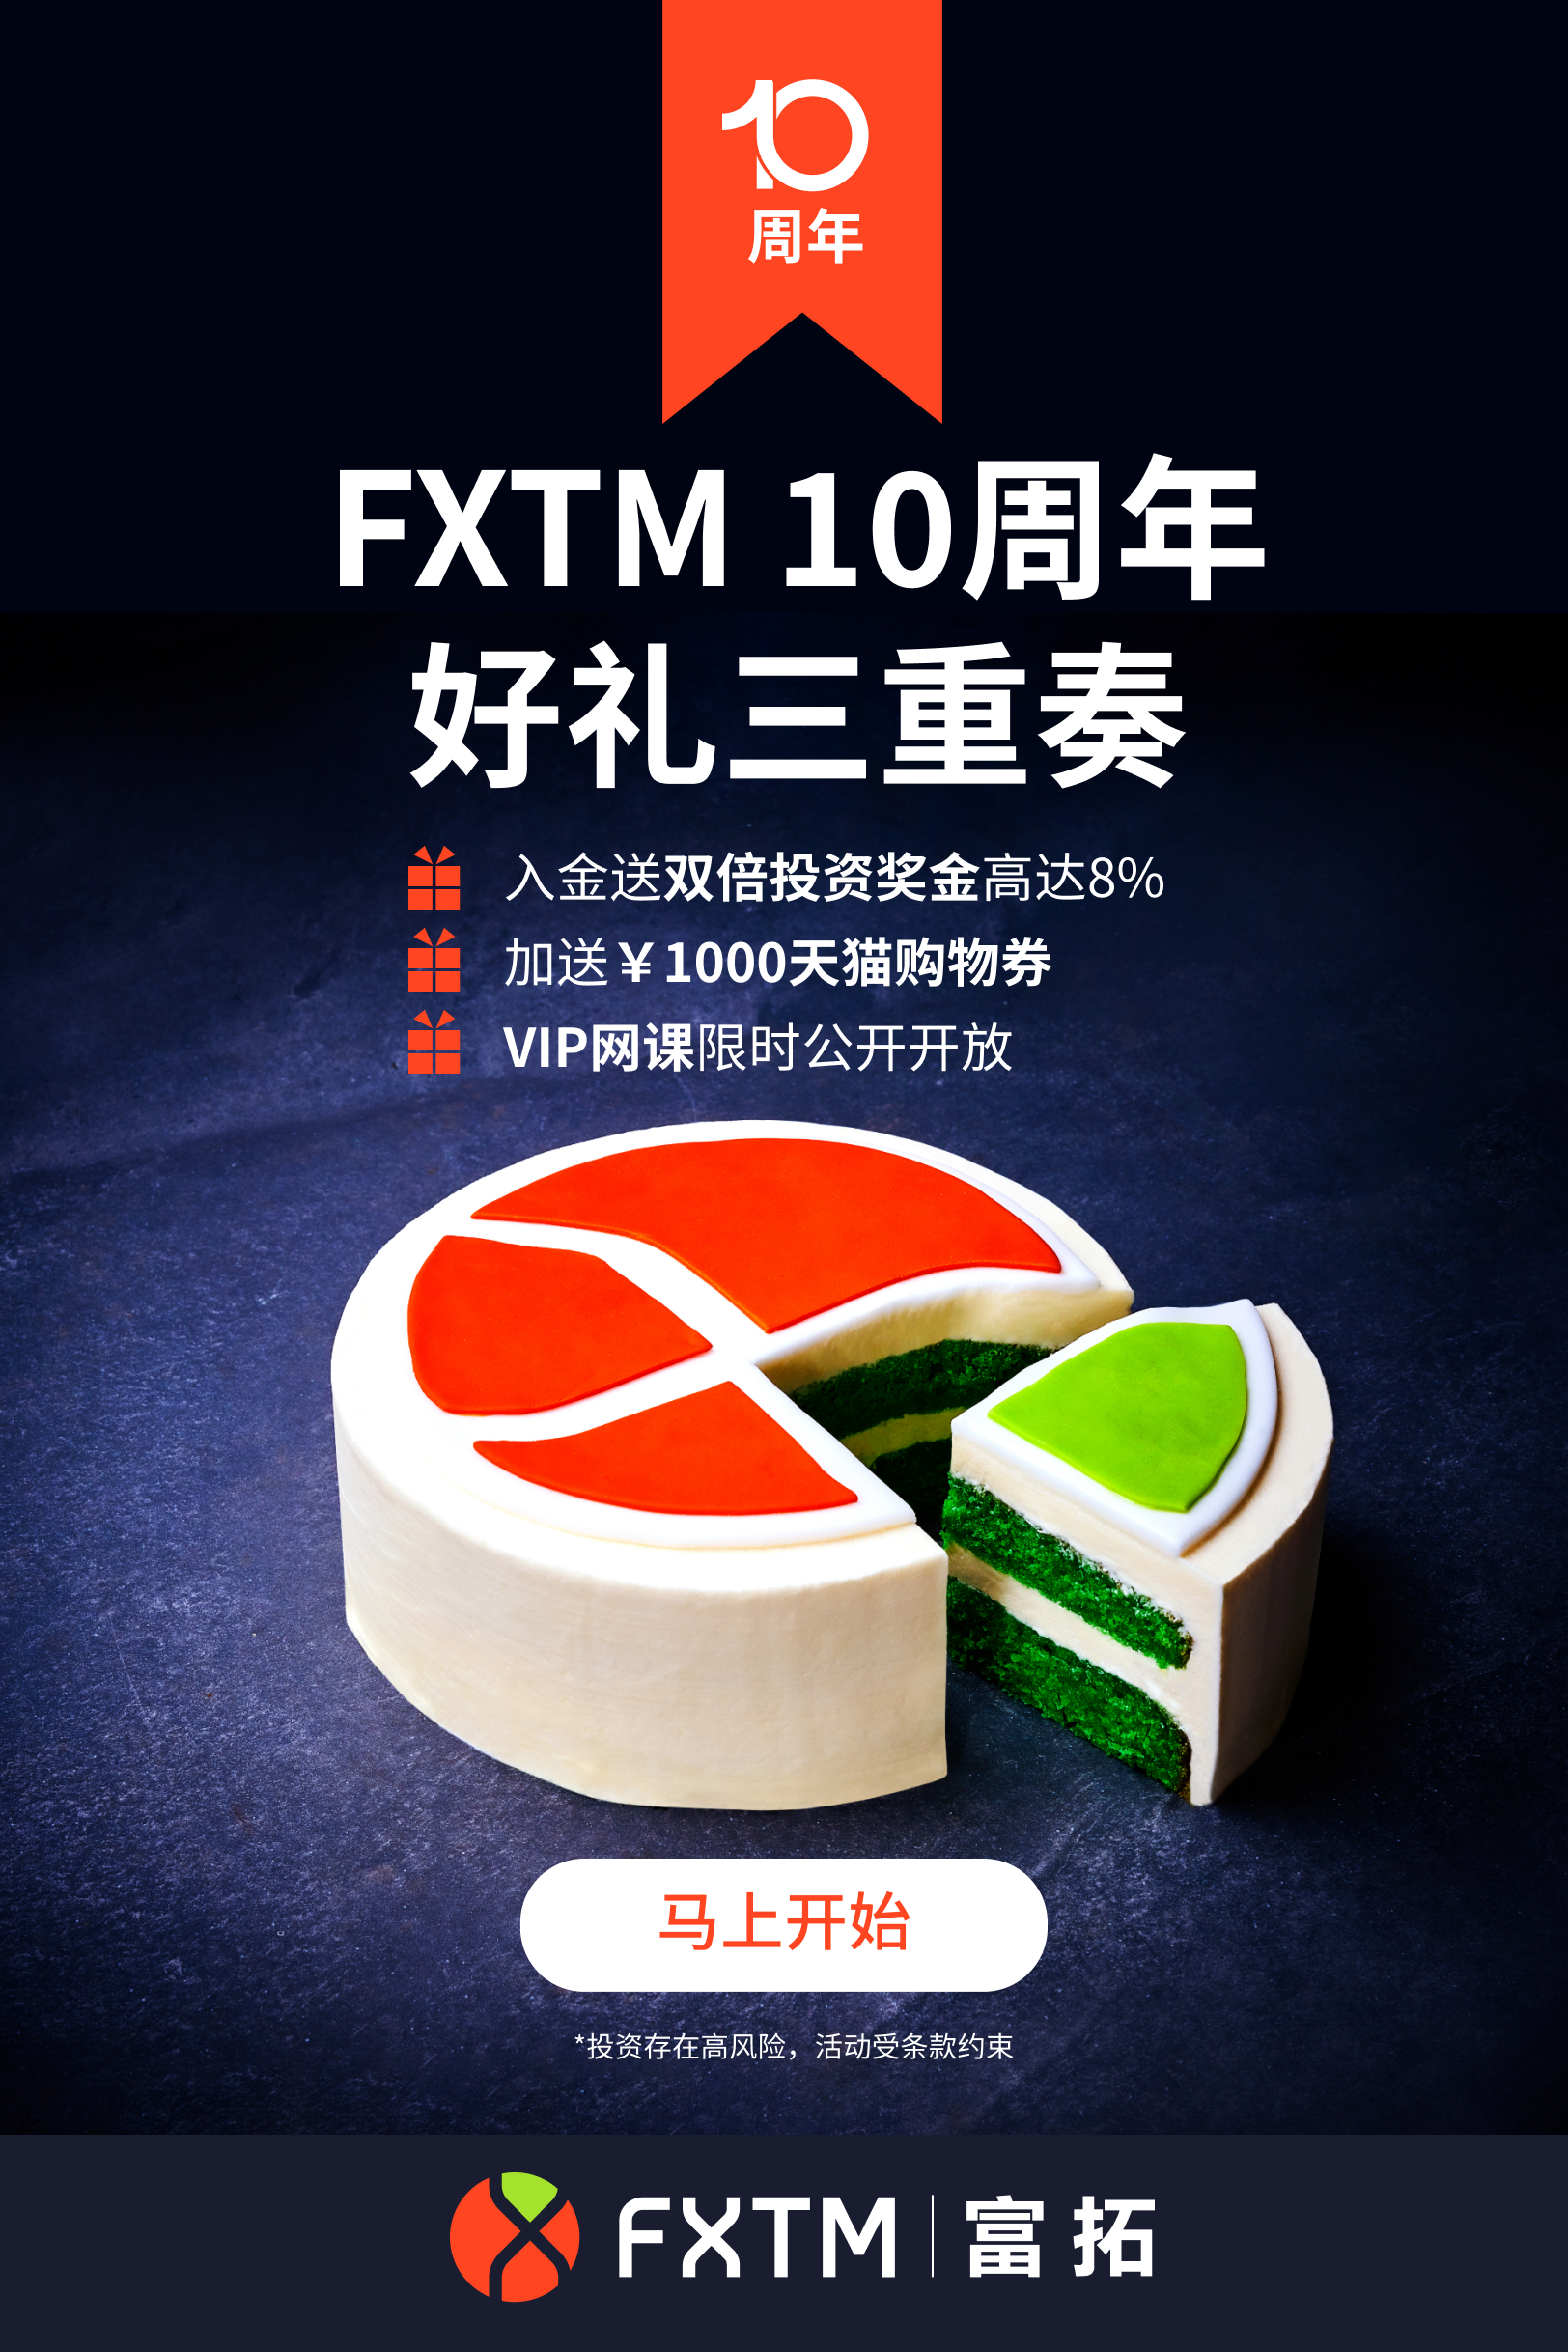 【FXTM富拓最新动态】 – 18个区块链相关美股已登录超低点差和0佣金账户MT5平台